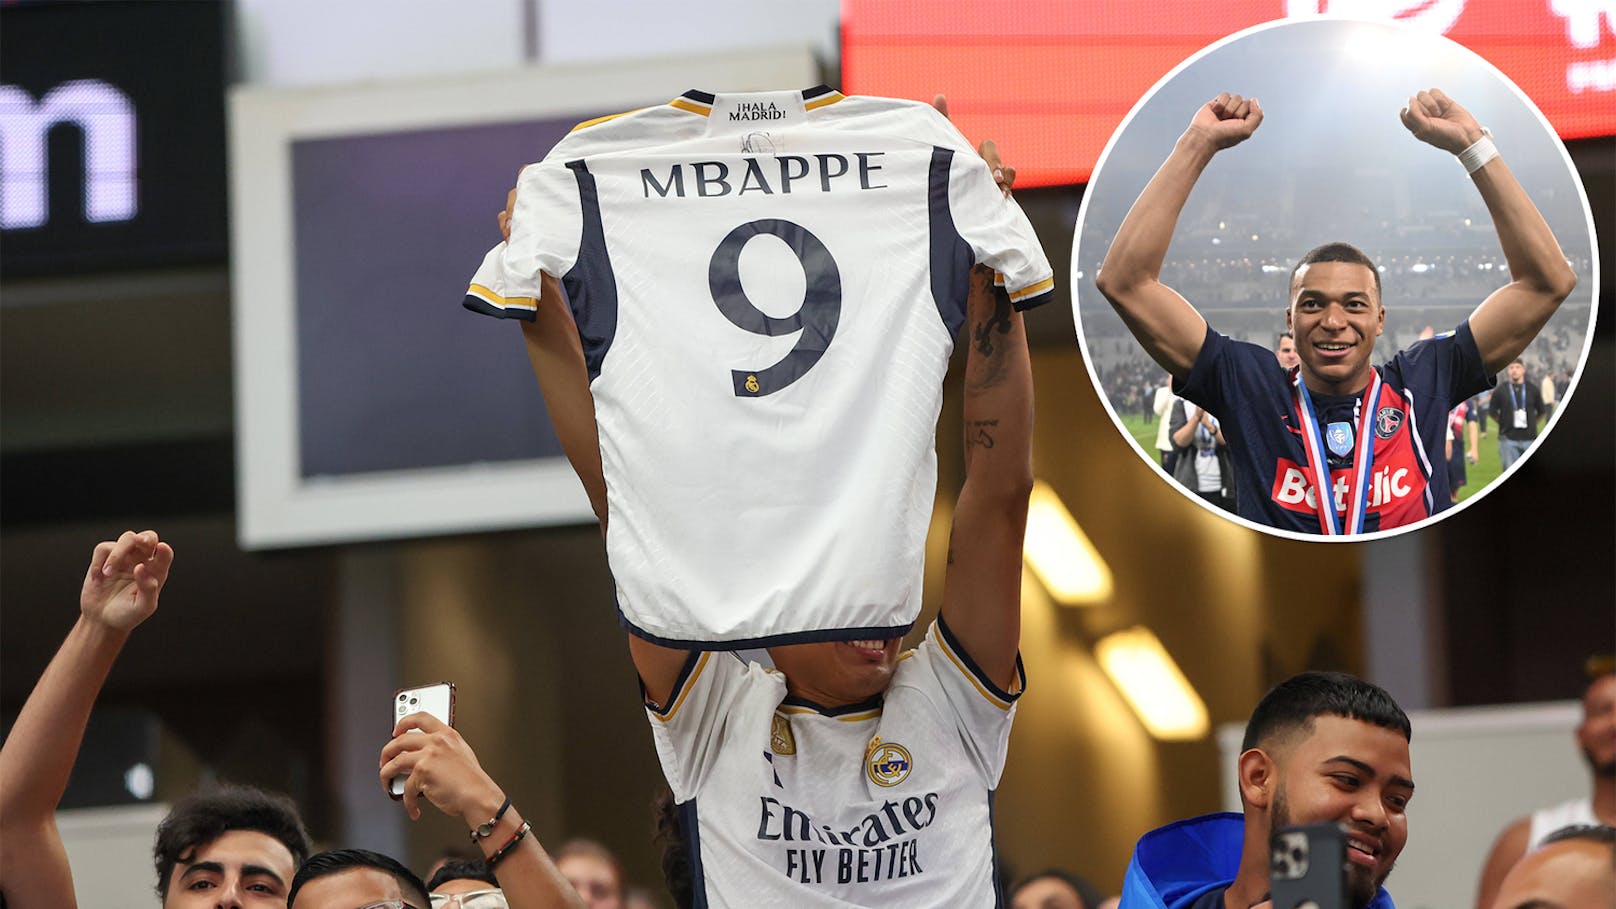 "Traum wird wahr!" Mbappe nach Real-Transfer emotional